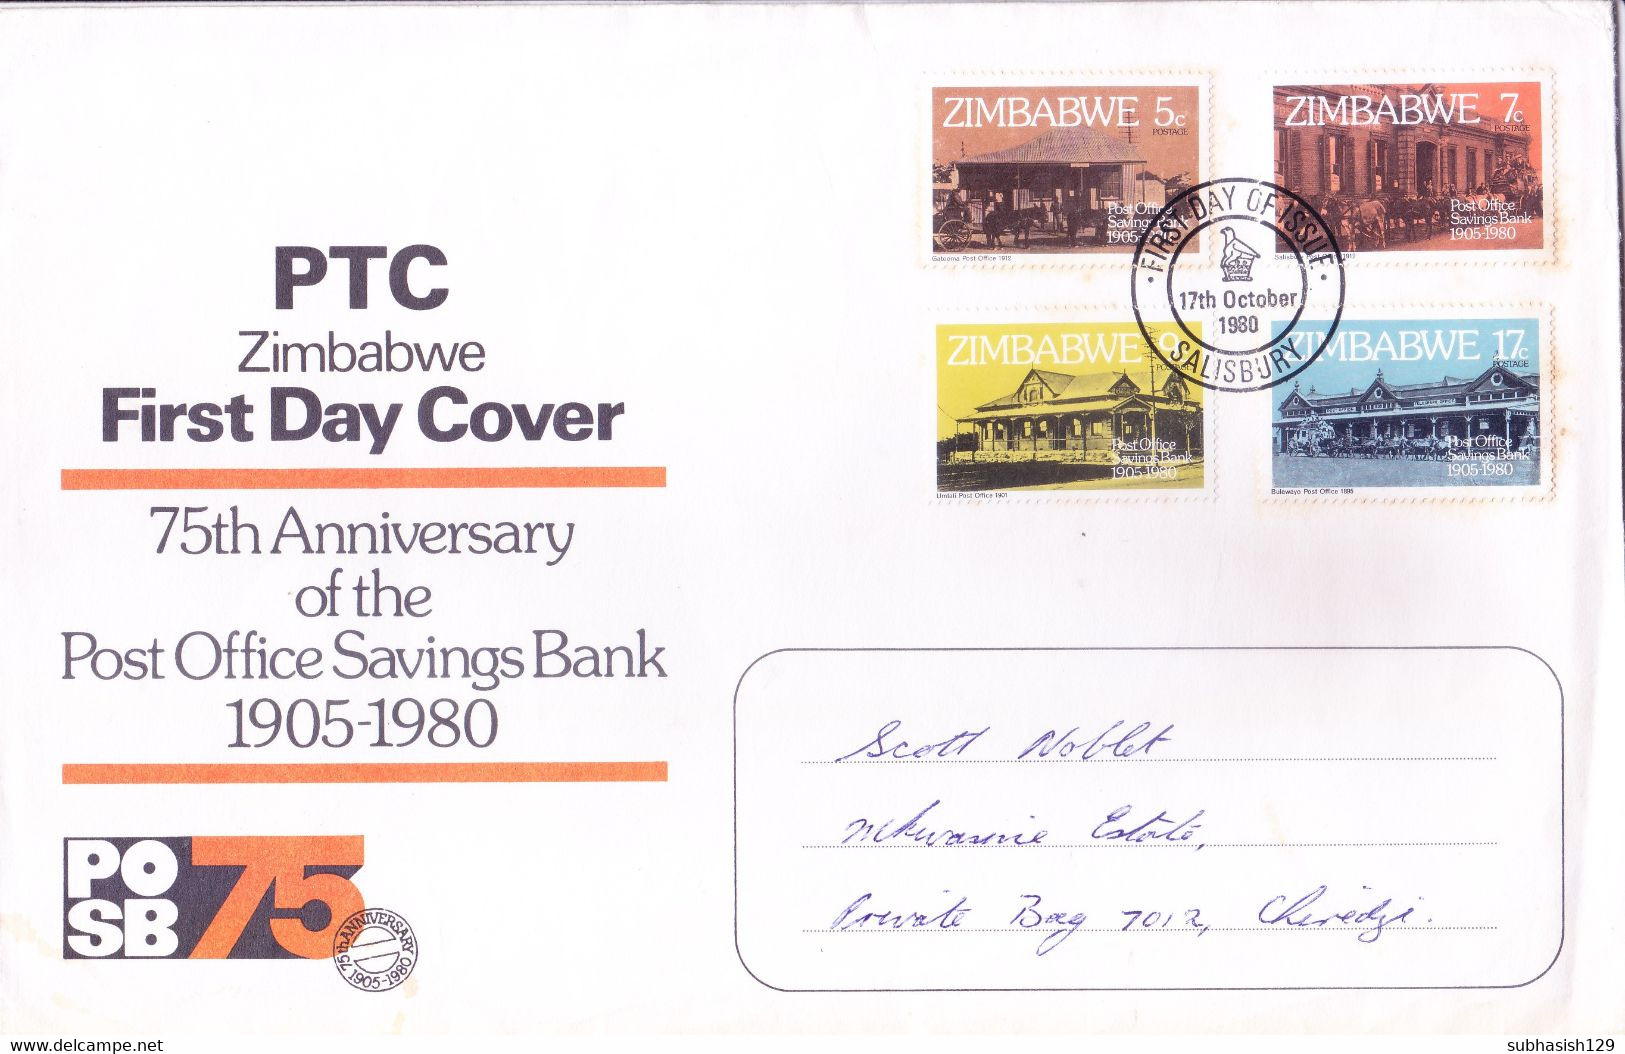 ZIMBABWE : FIRST DAY COVER : 17 OCTOBER 1980: 75TH ANNIVERSARY OF POST OFFICE SAVINGS BANK - Zambeze